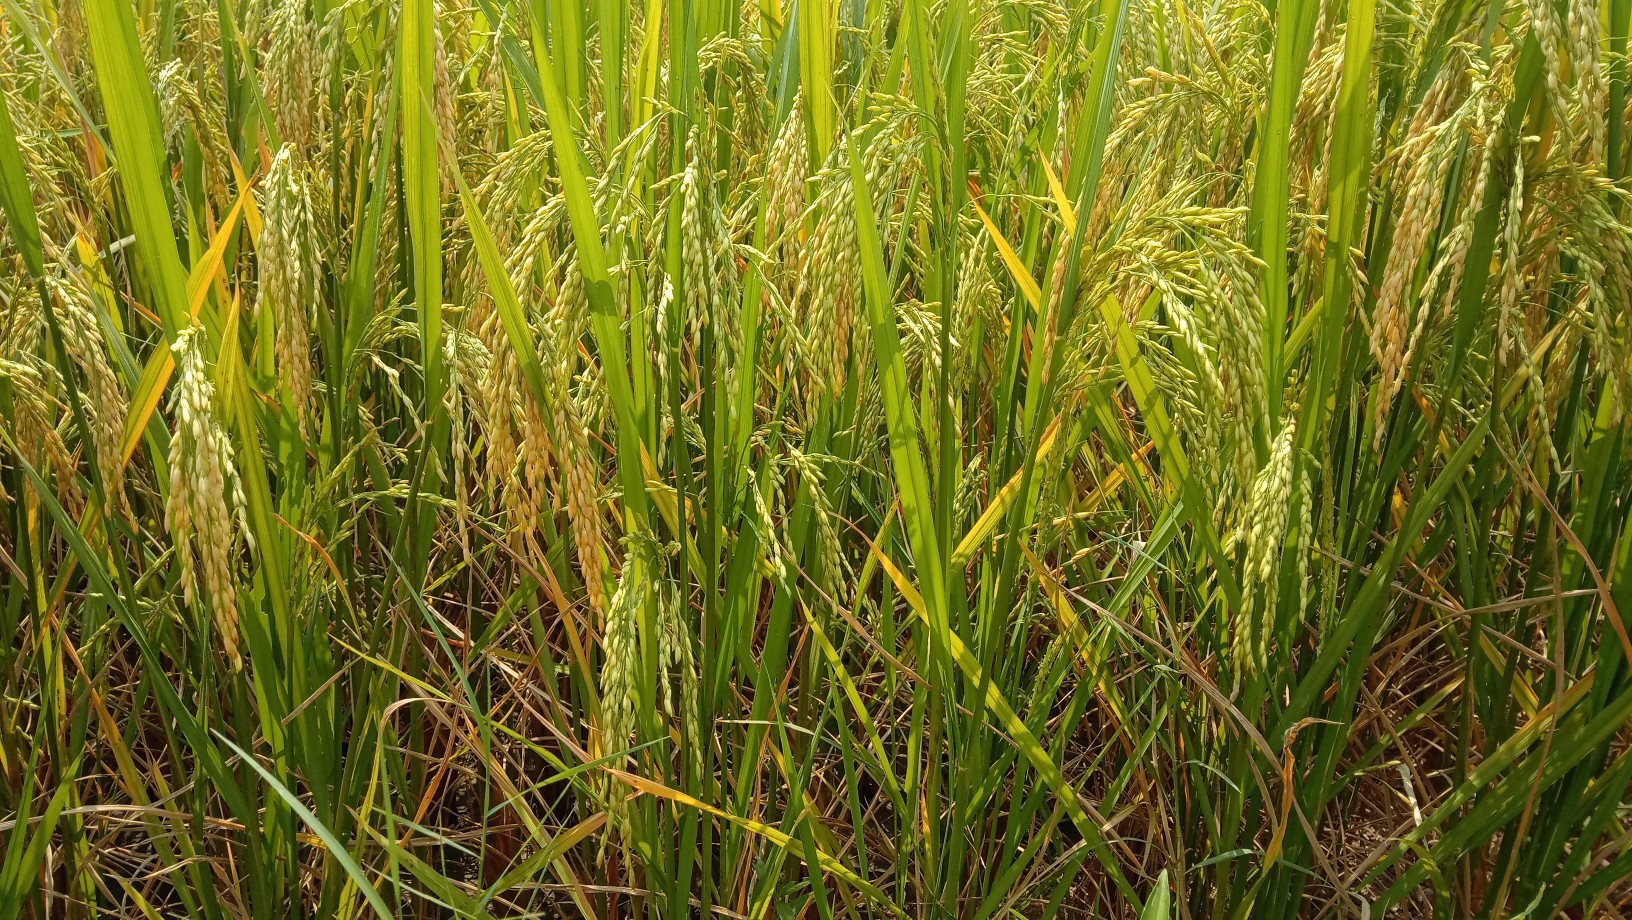 Farmers Love Nature Wallpaper Image - Sweet Grass - HD Wallpaper 